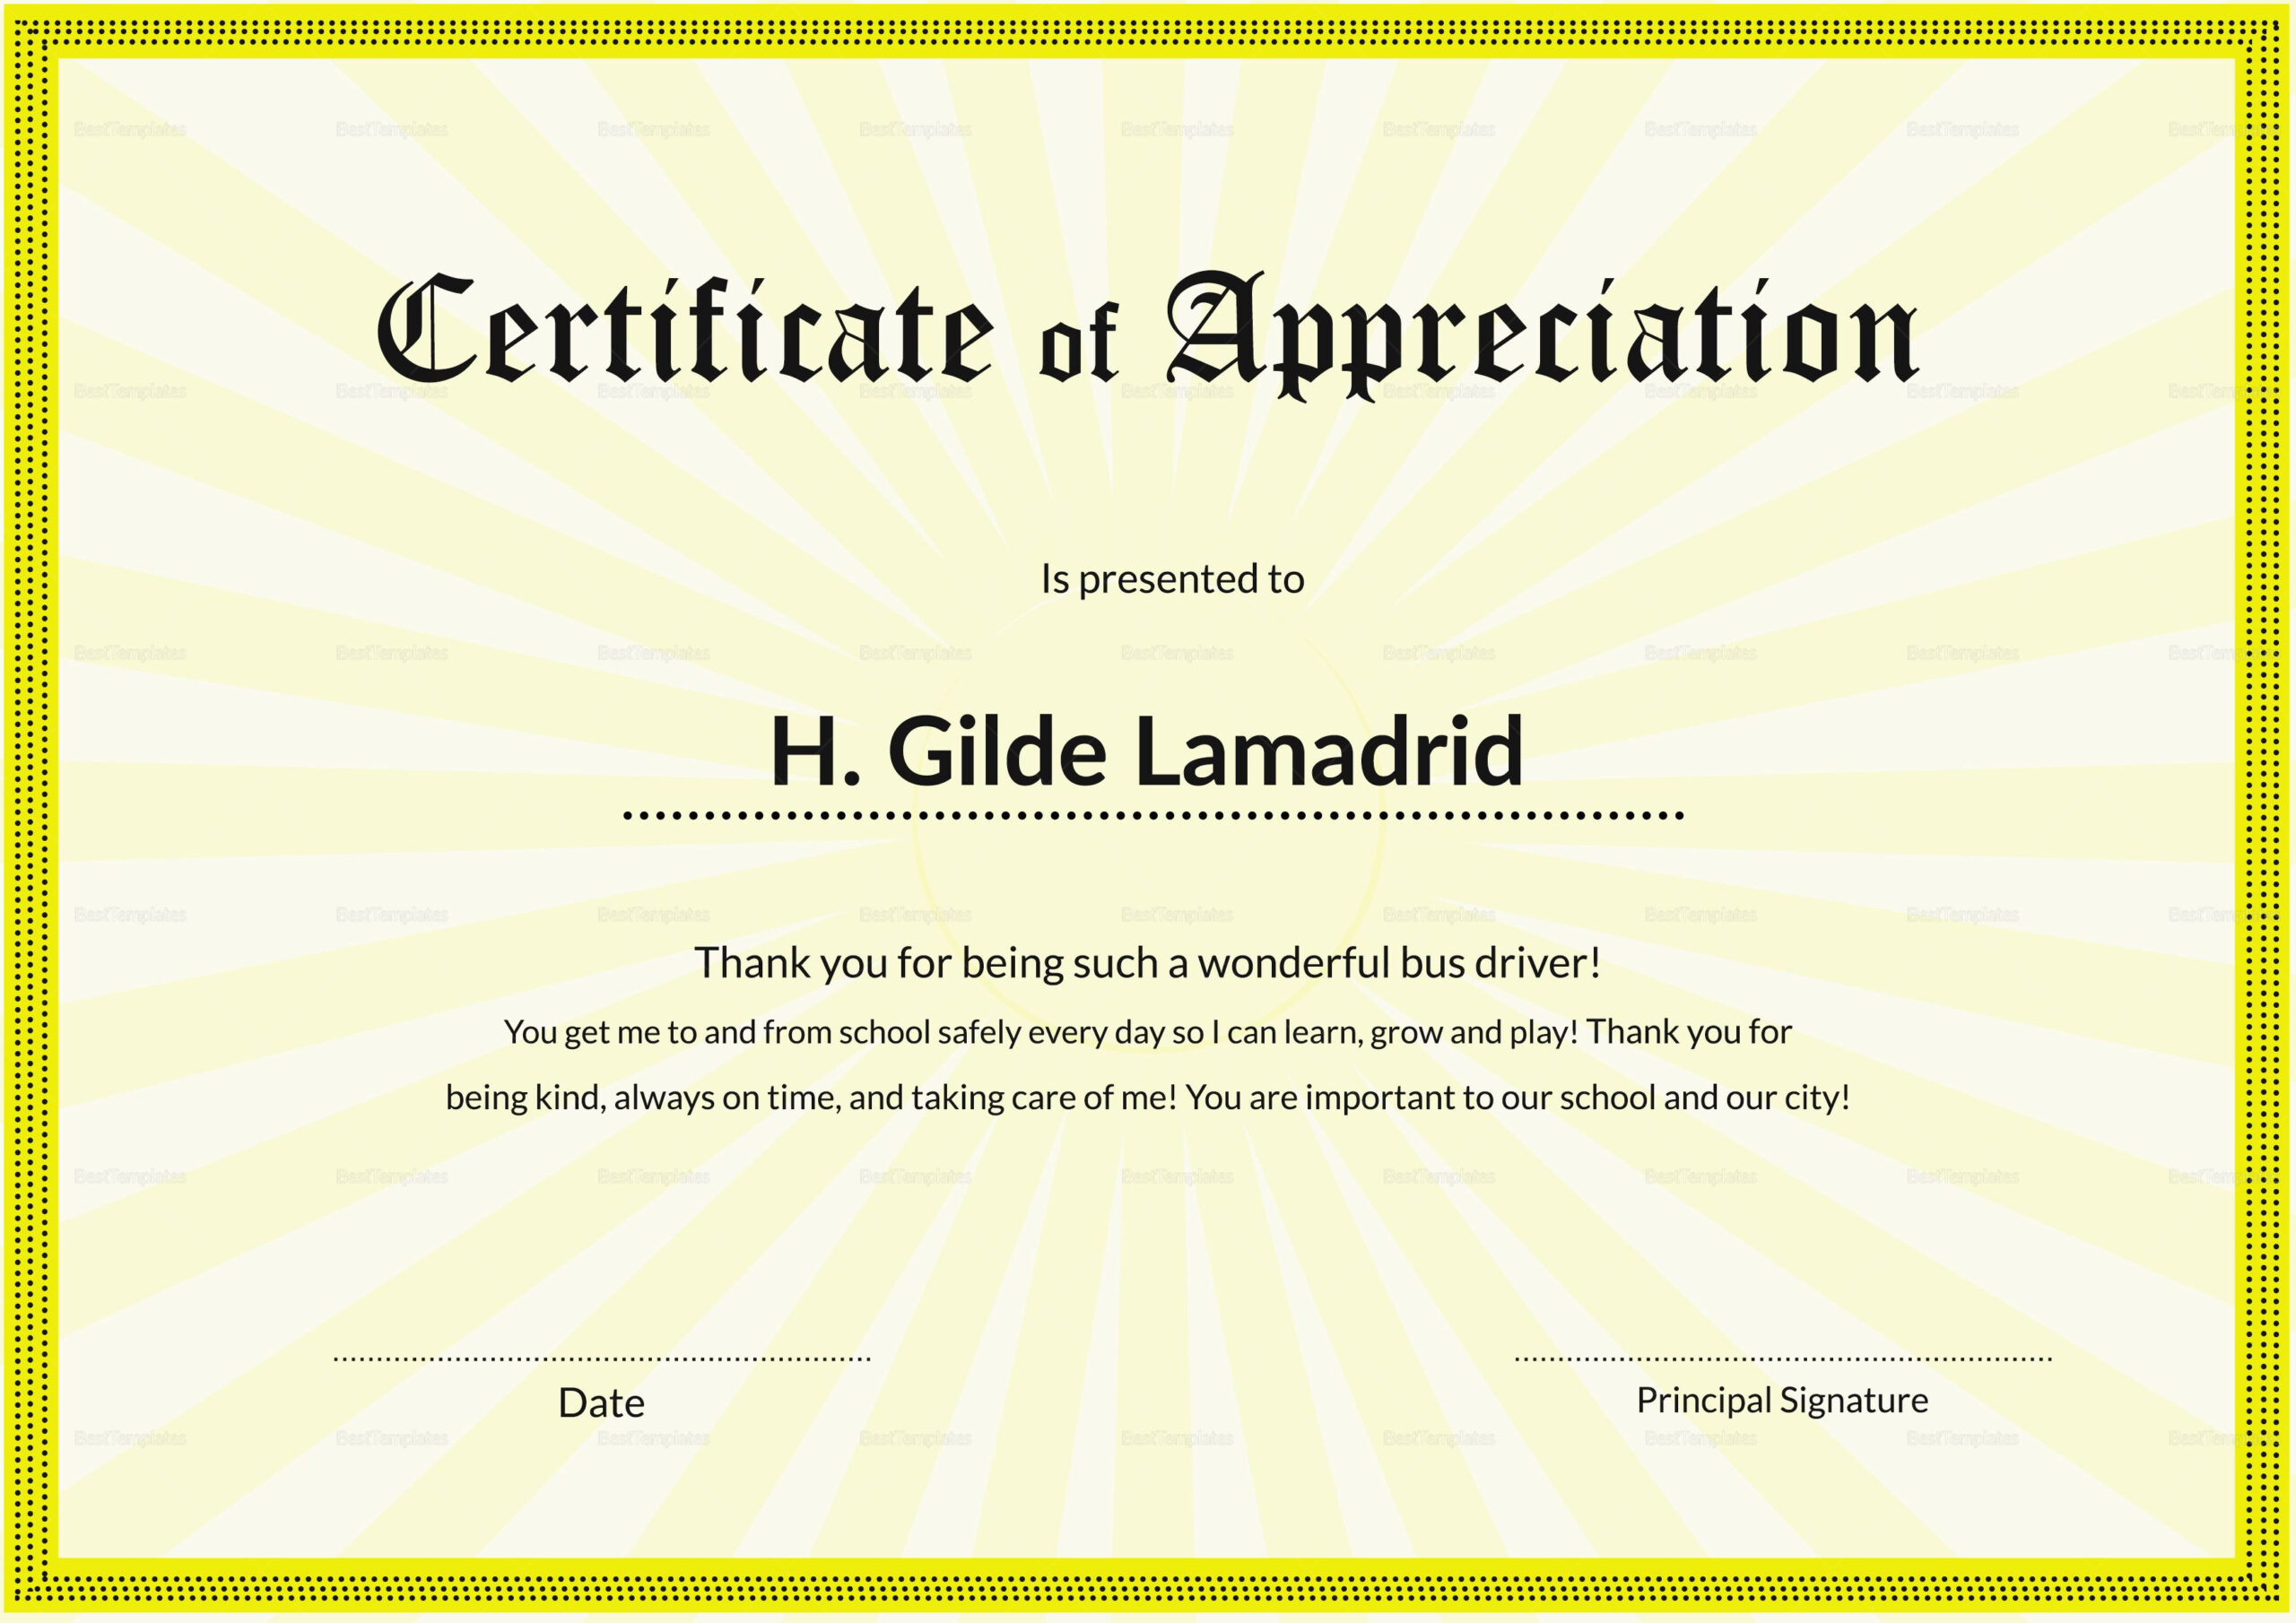 Certificate Of School Appreciation Template | Certificate Of with regard to Free Certificate Of Appreciation Template Doc